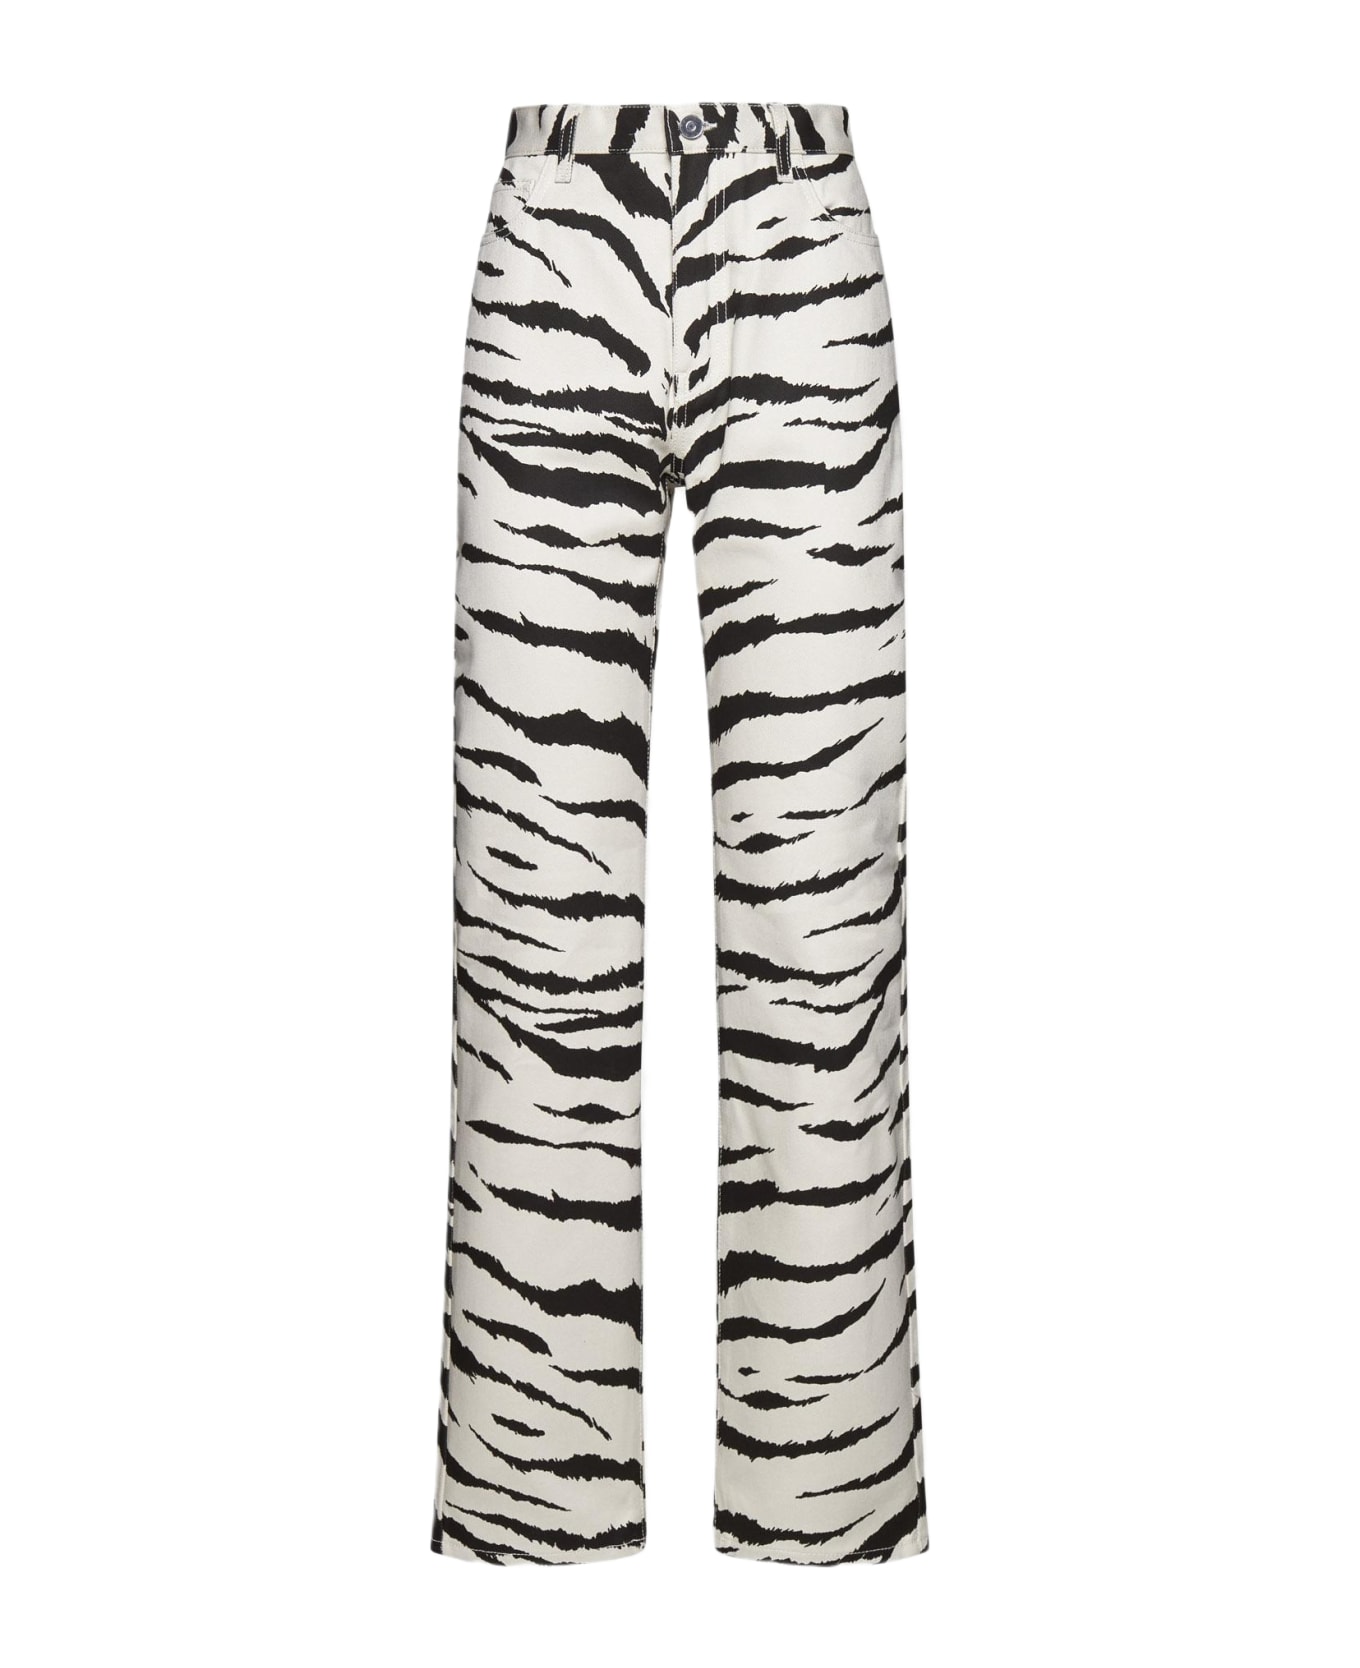 Alaia Zebra Print Jeans - Beige